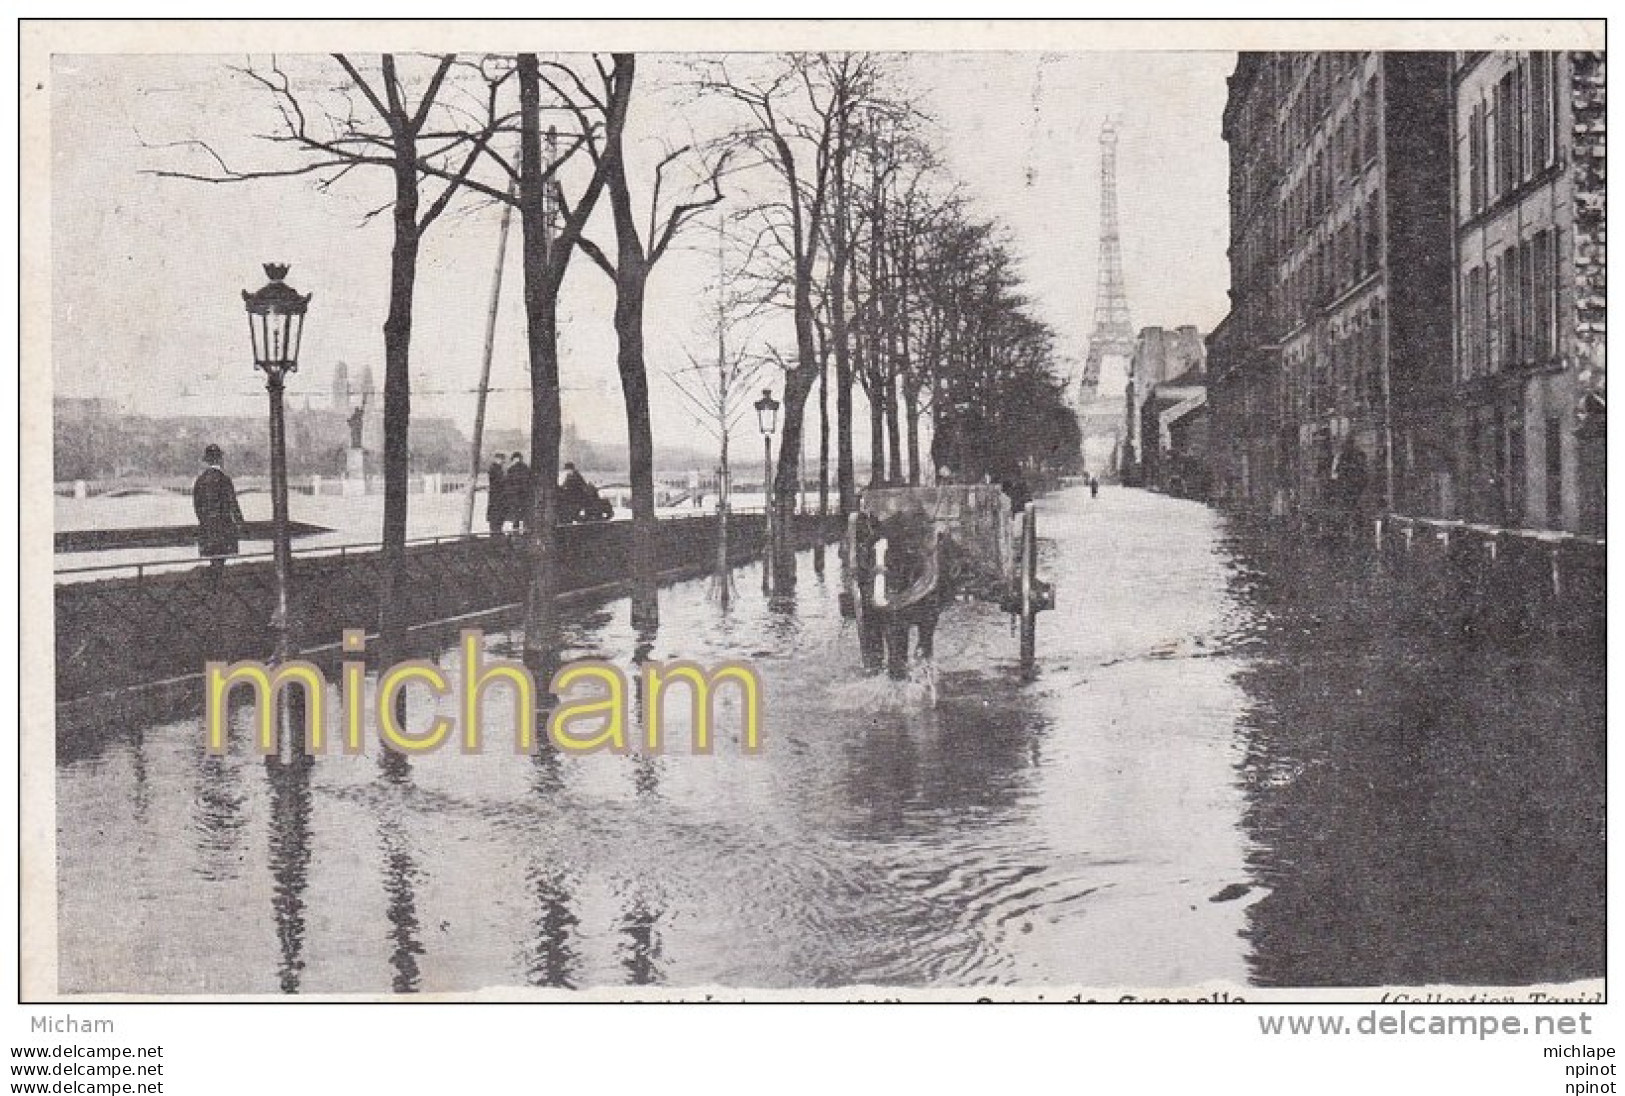 CPA    75 PARIS    CRUE  DE 1910  QUAI DE GRENELLE  TB ETAT - Überschwemmung 1910